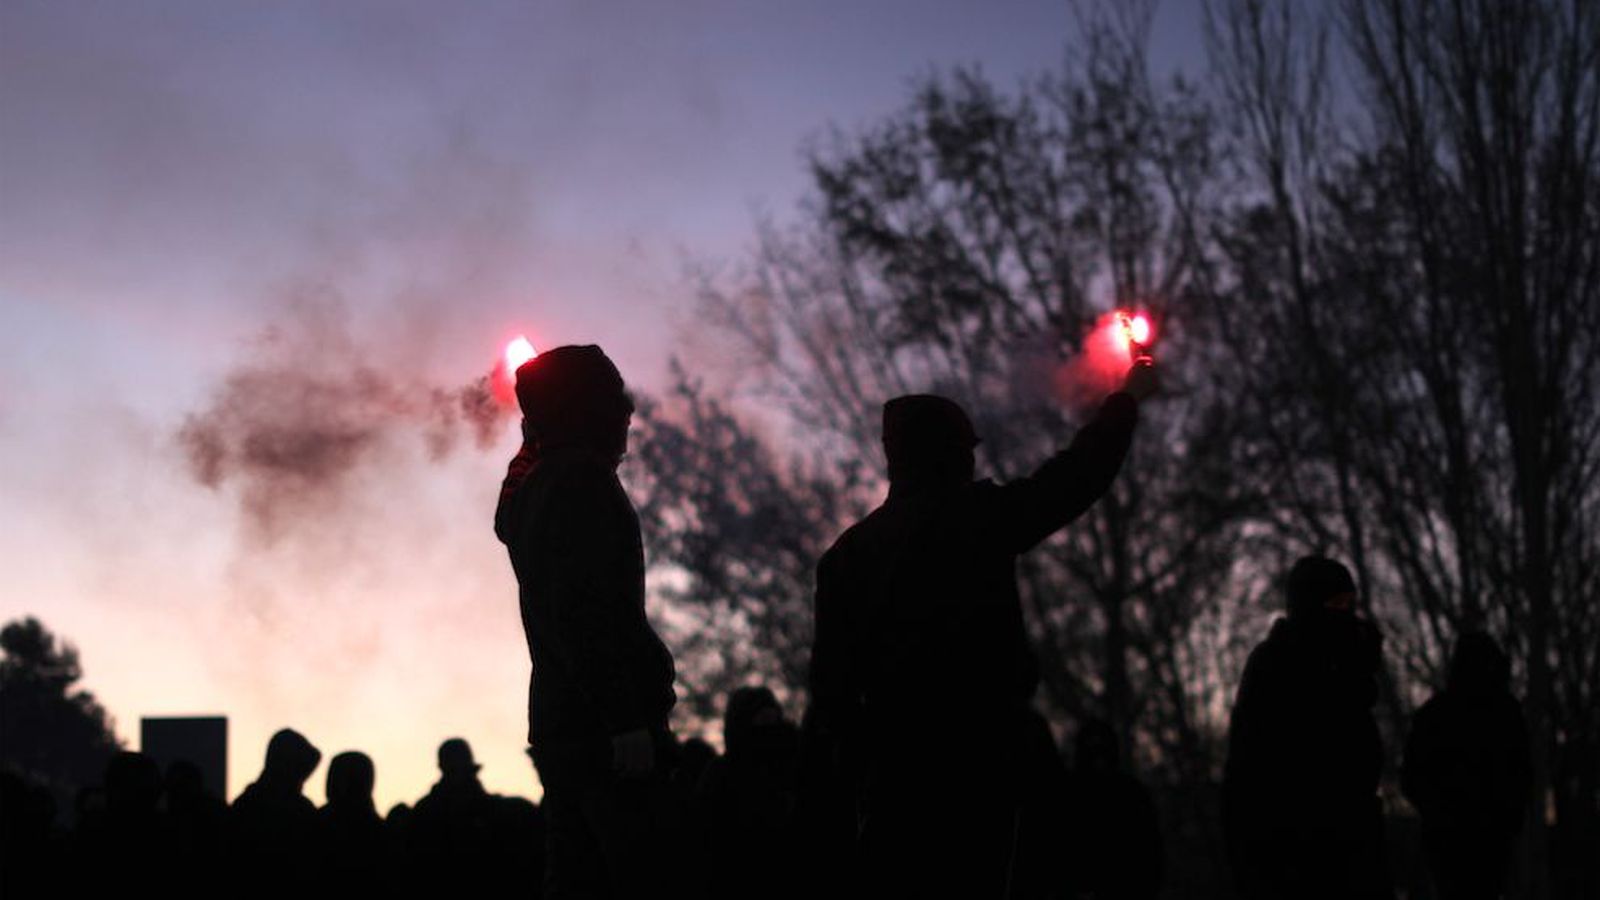 Foto: Estudiantes durante la noche de protestas que pasaron en el campus. (Andreu Tarrés Ruzicska)